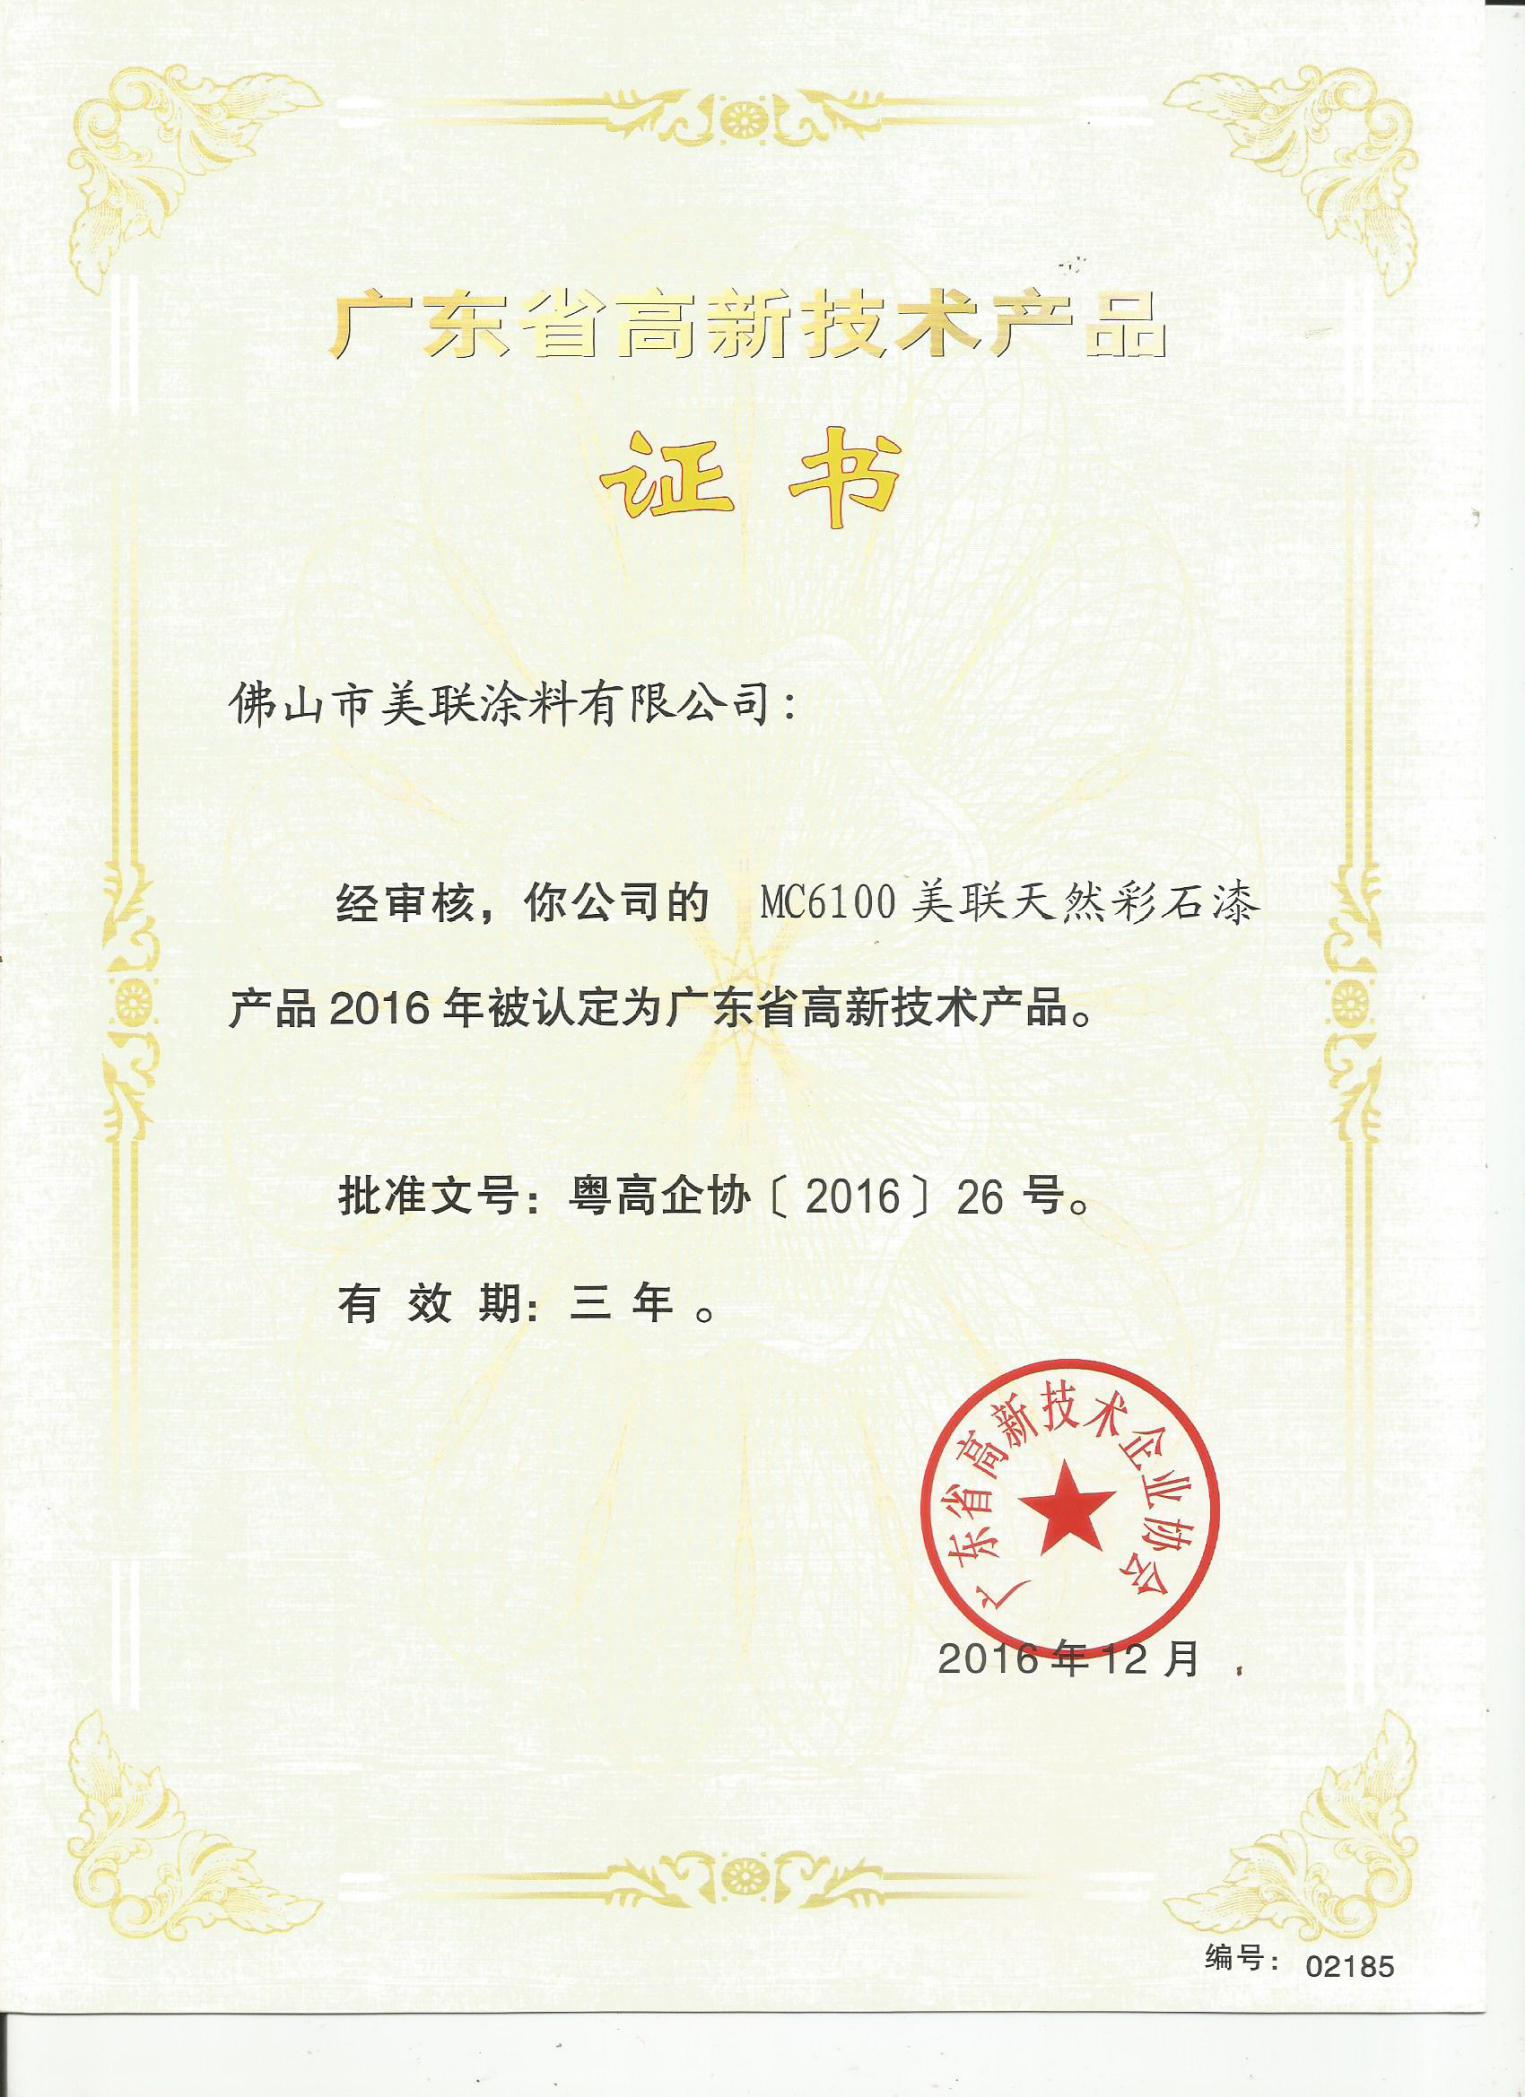 MC6100美联天然彩石漆认定为广东省高新技术产品-美联荣誉